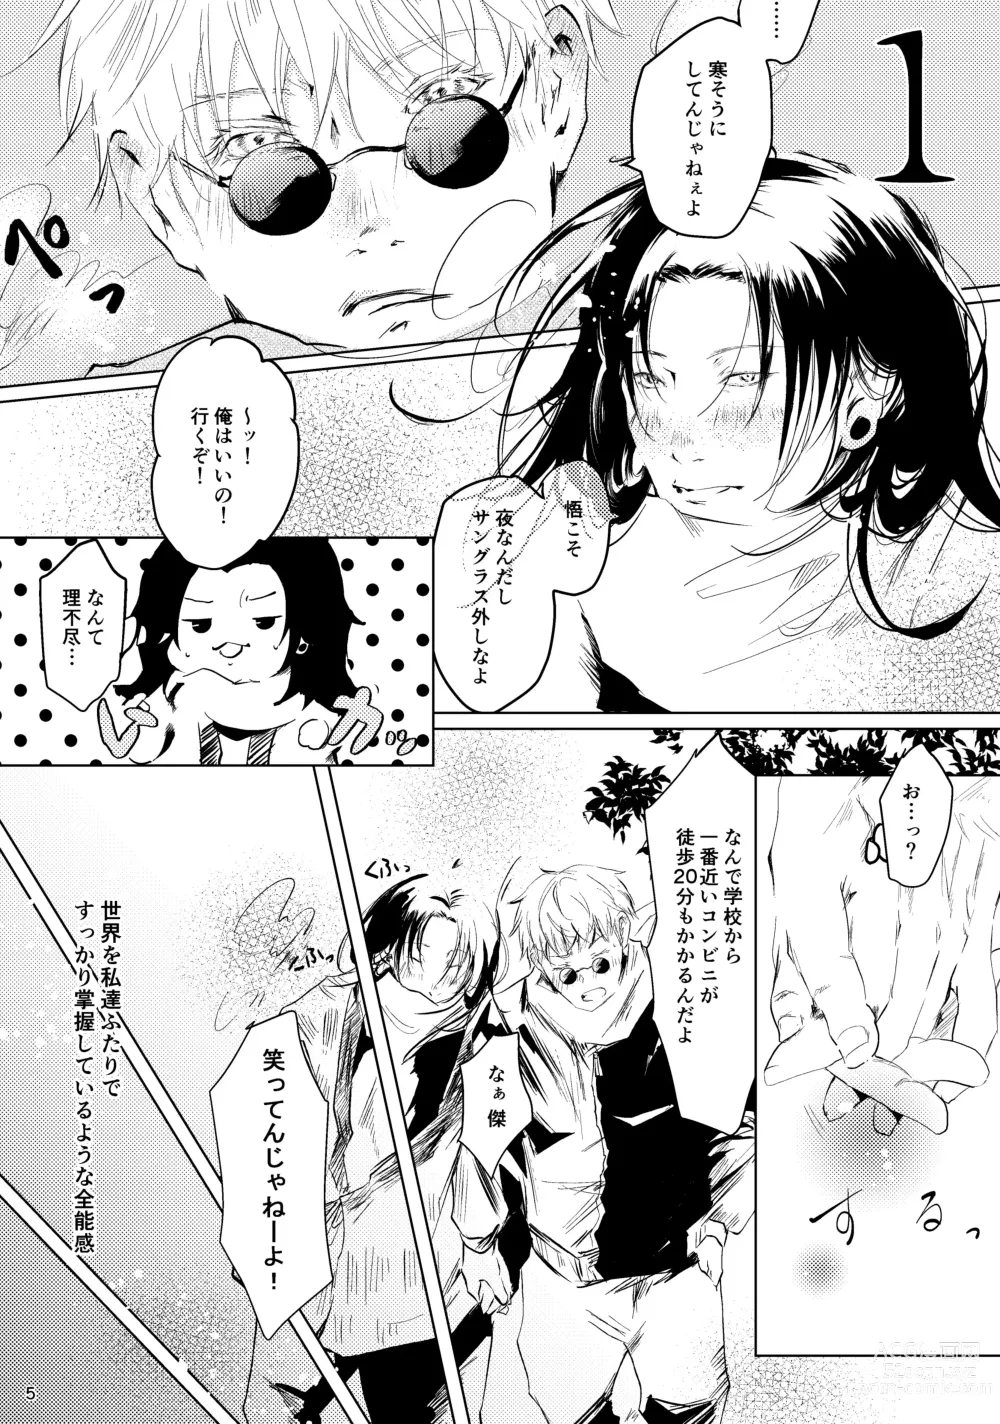 Page 4 of doujinshi Hana kanmuri